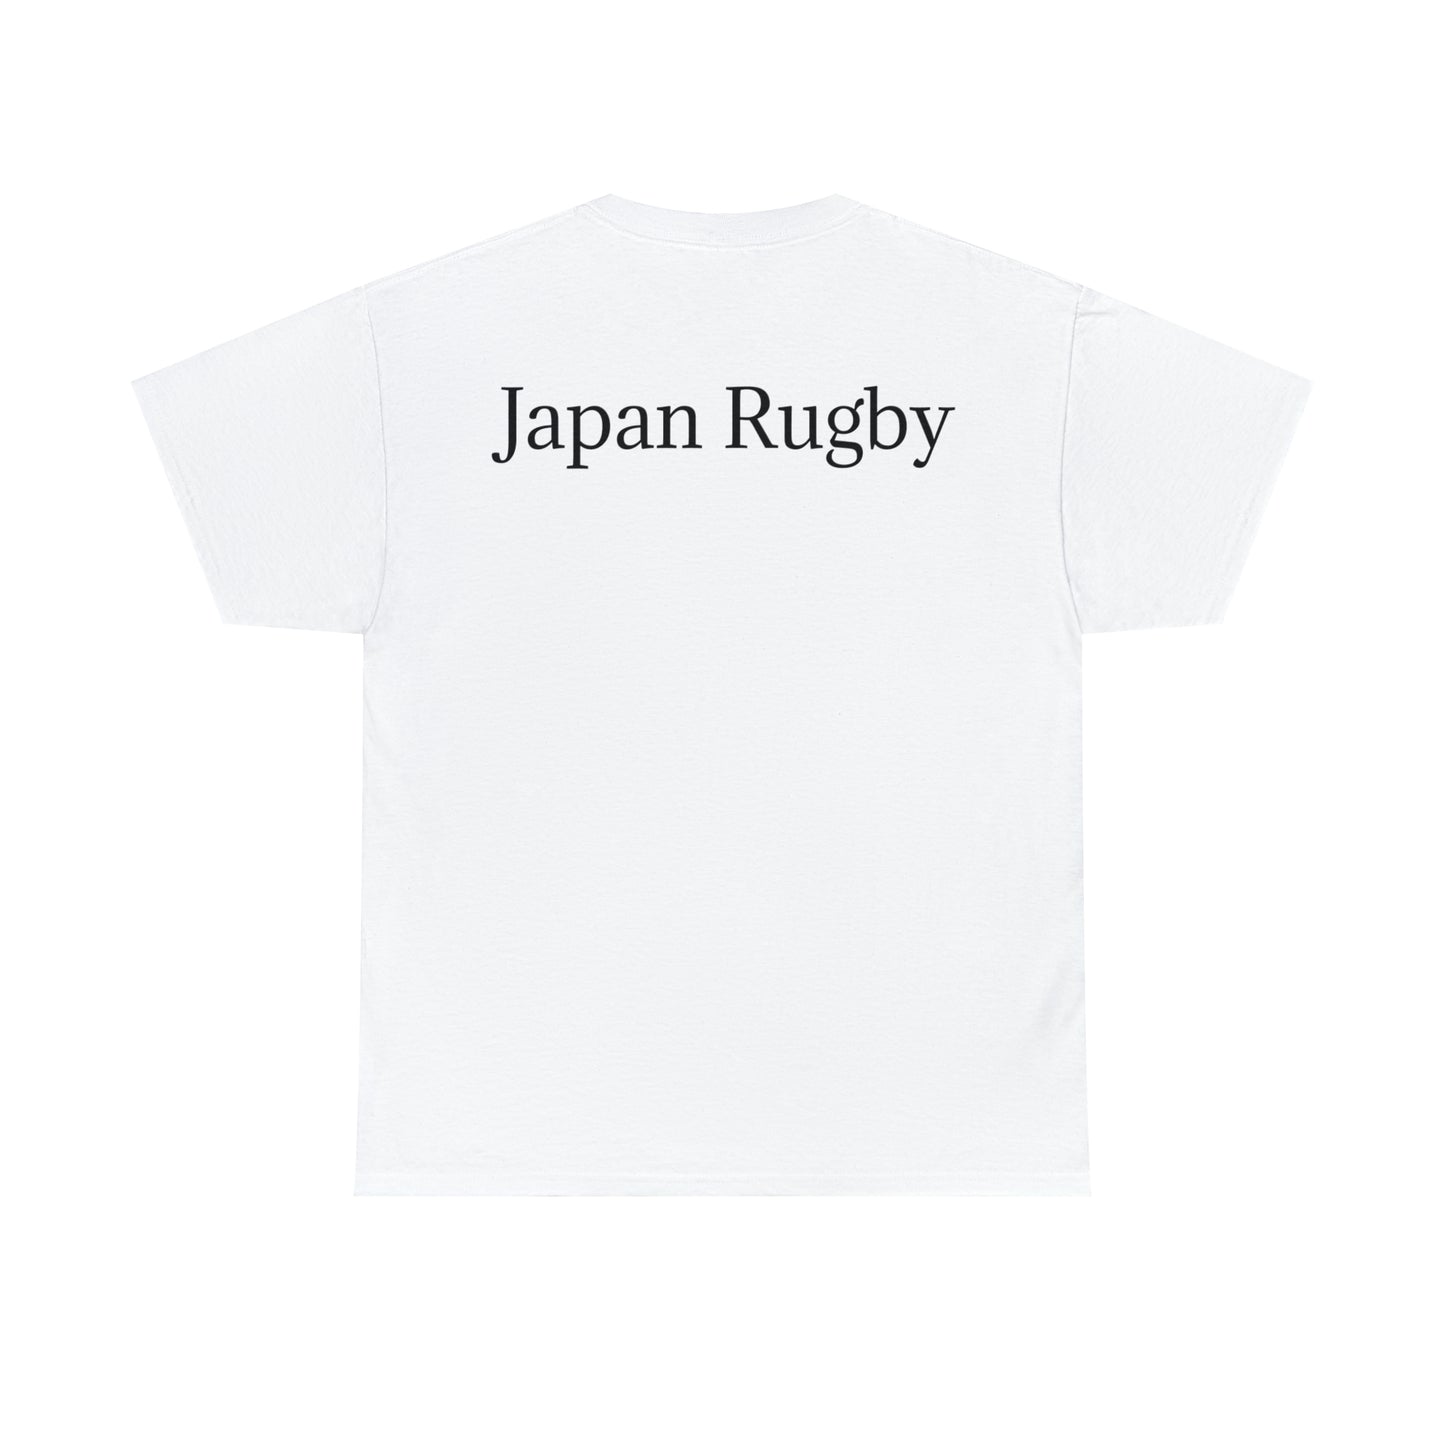 Japan lifting RWC - light shirts